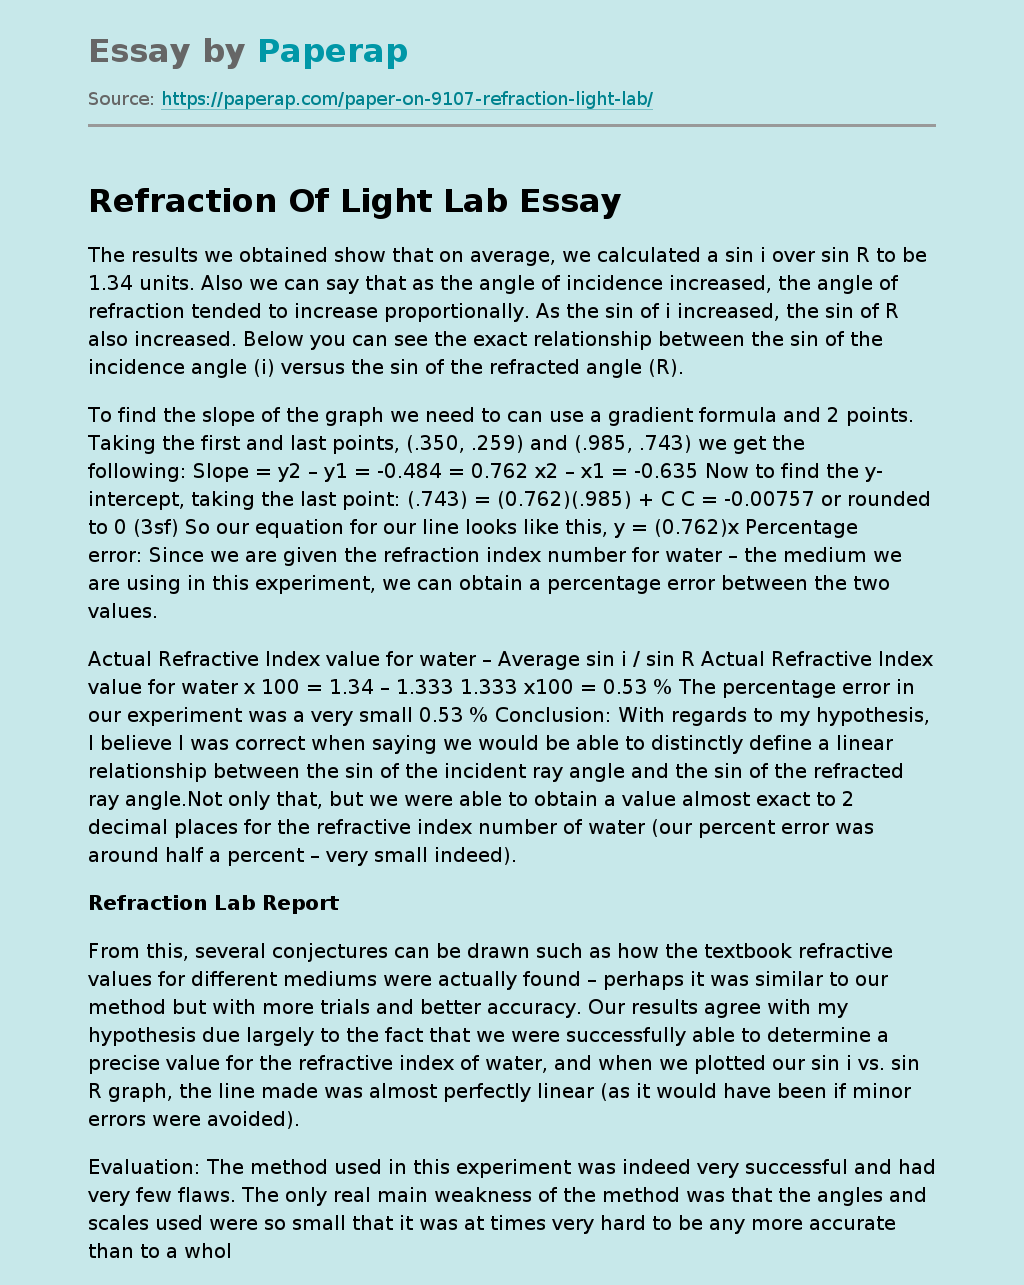 Refraction Of Light Lab